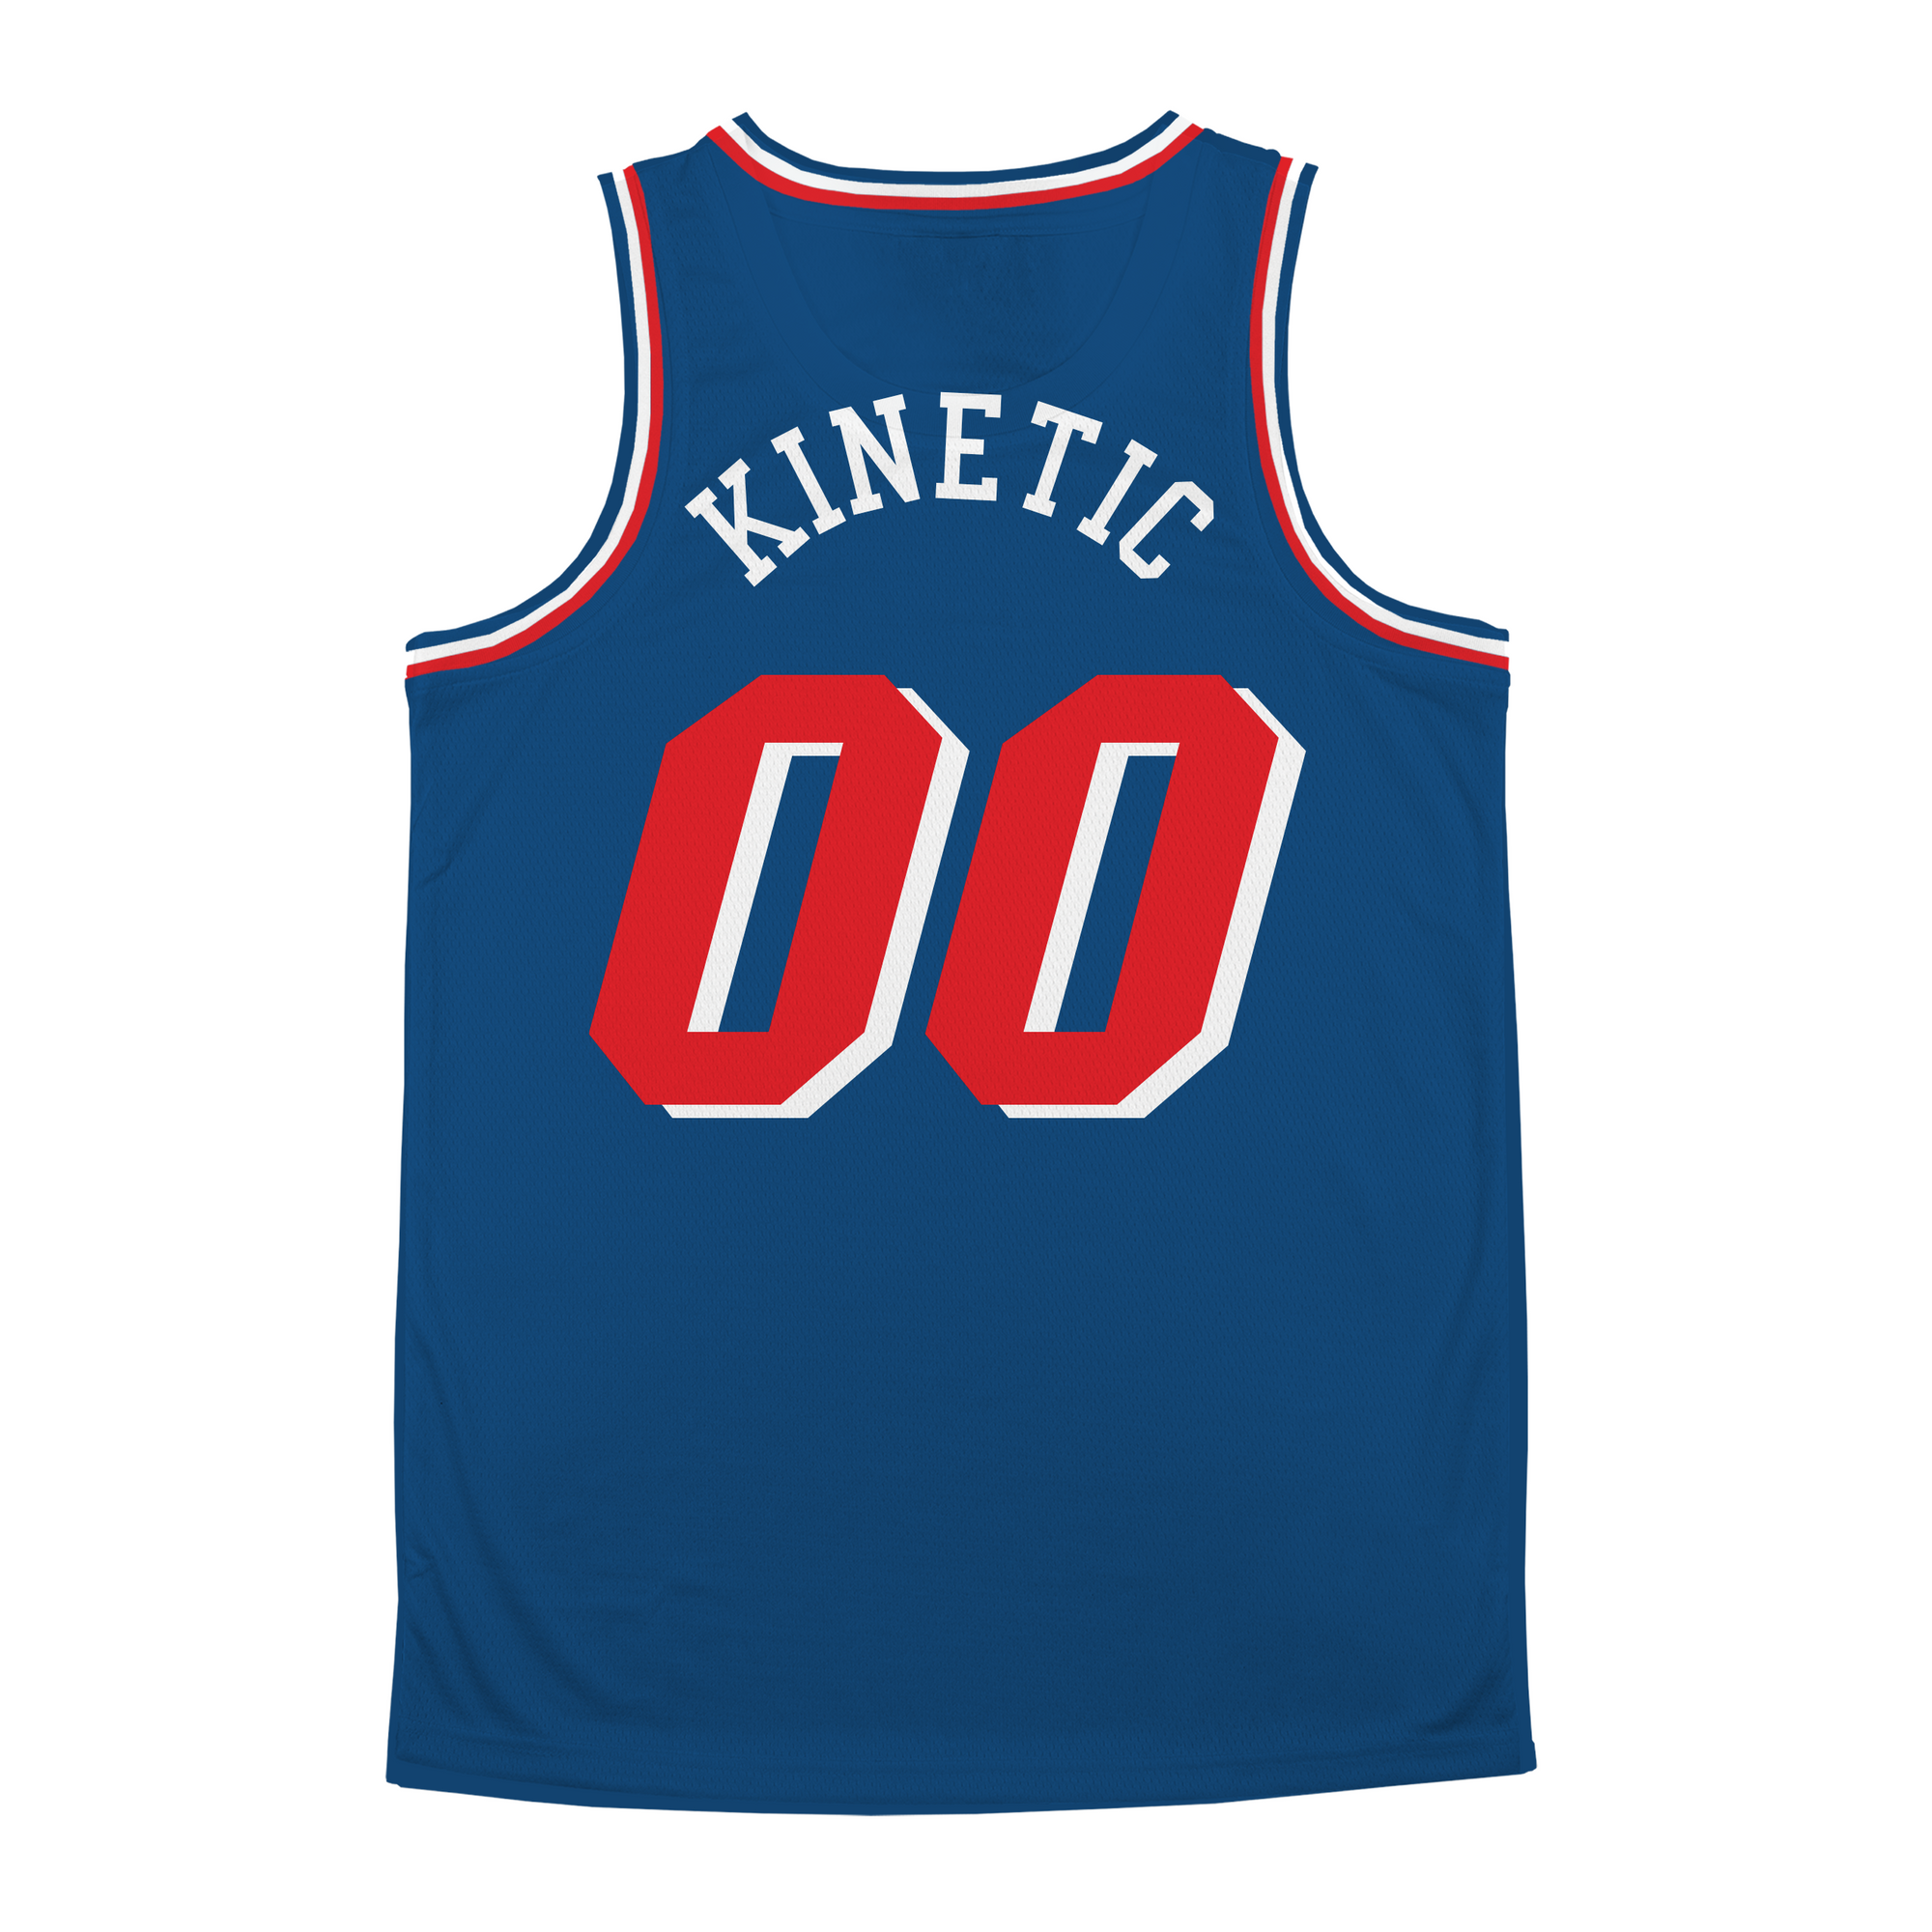 Kappa Sigma - The Dream Basketball Jersey